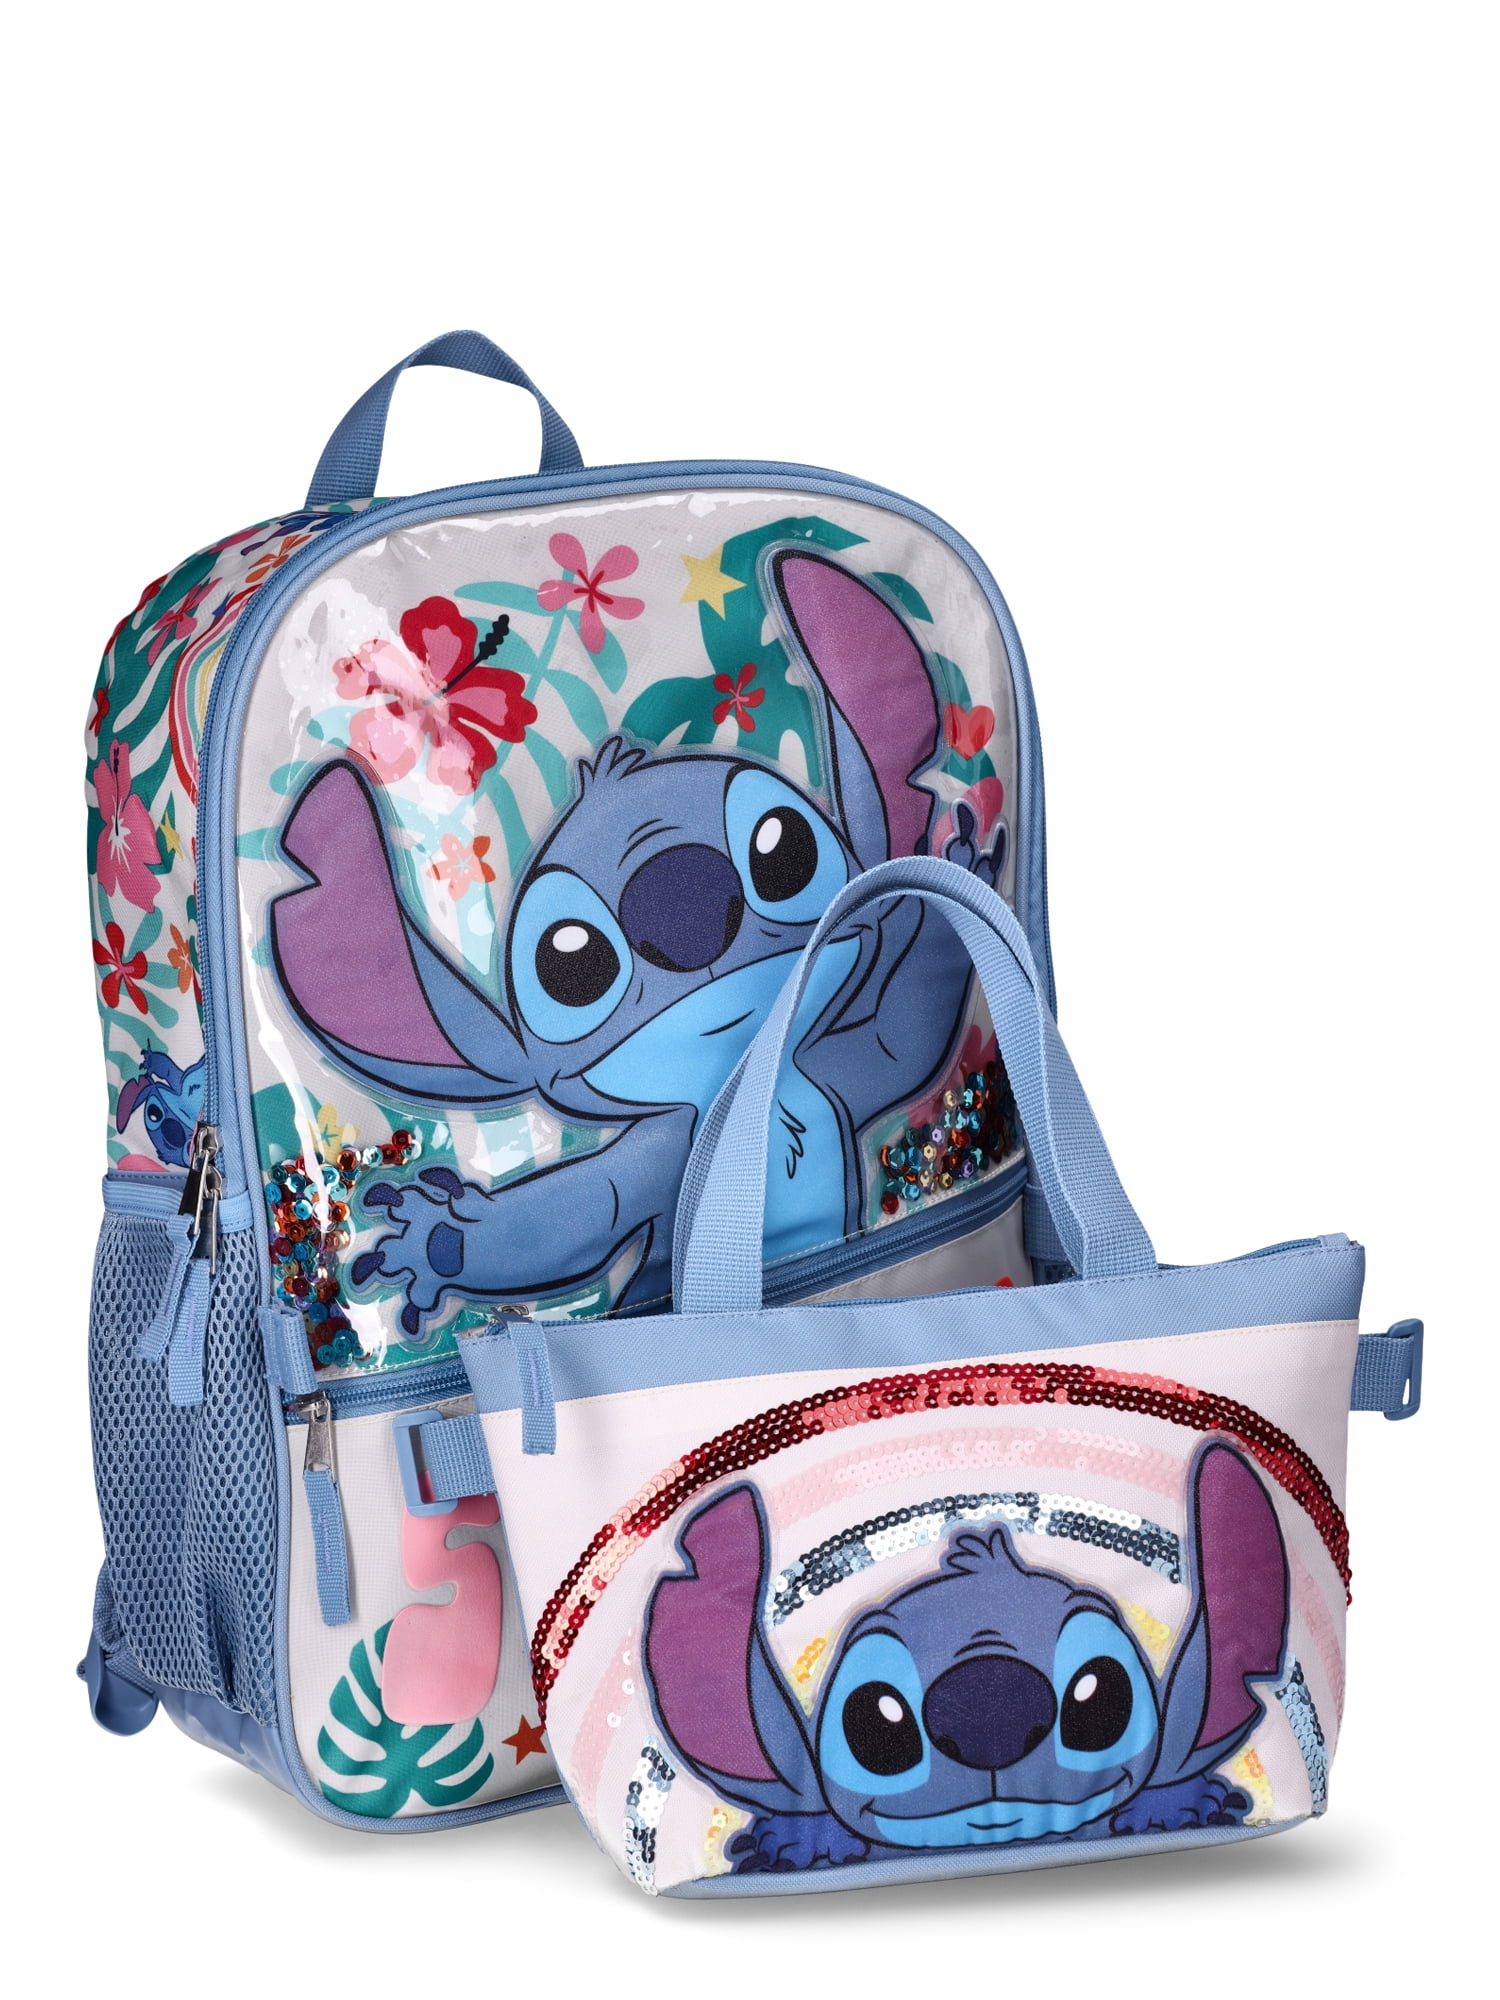 Stitch Backpack